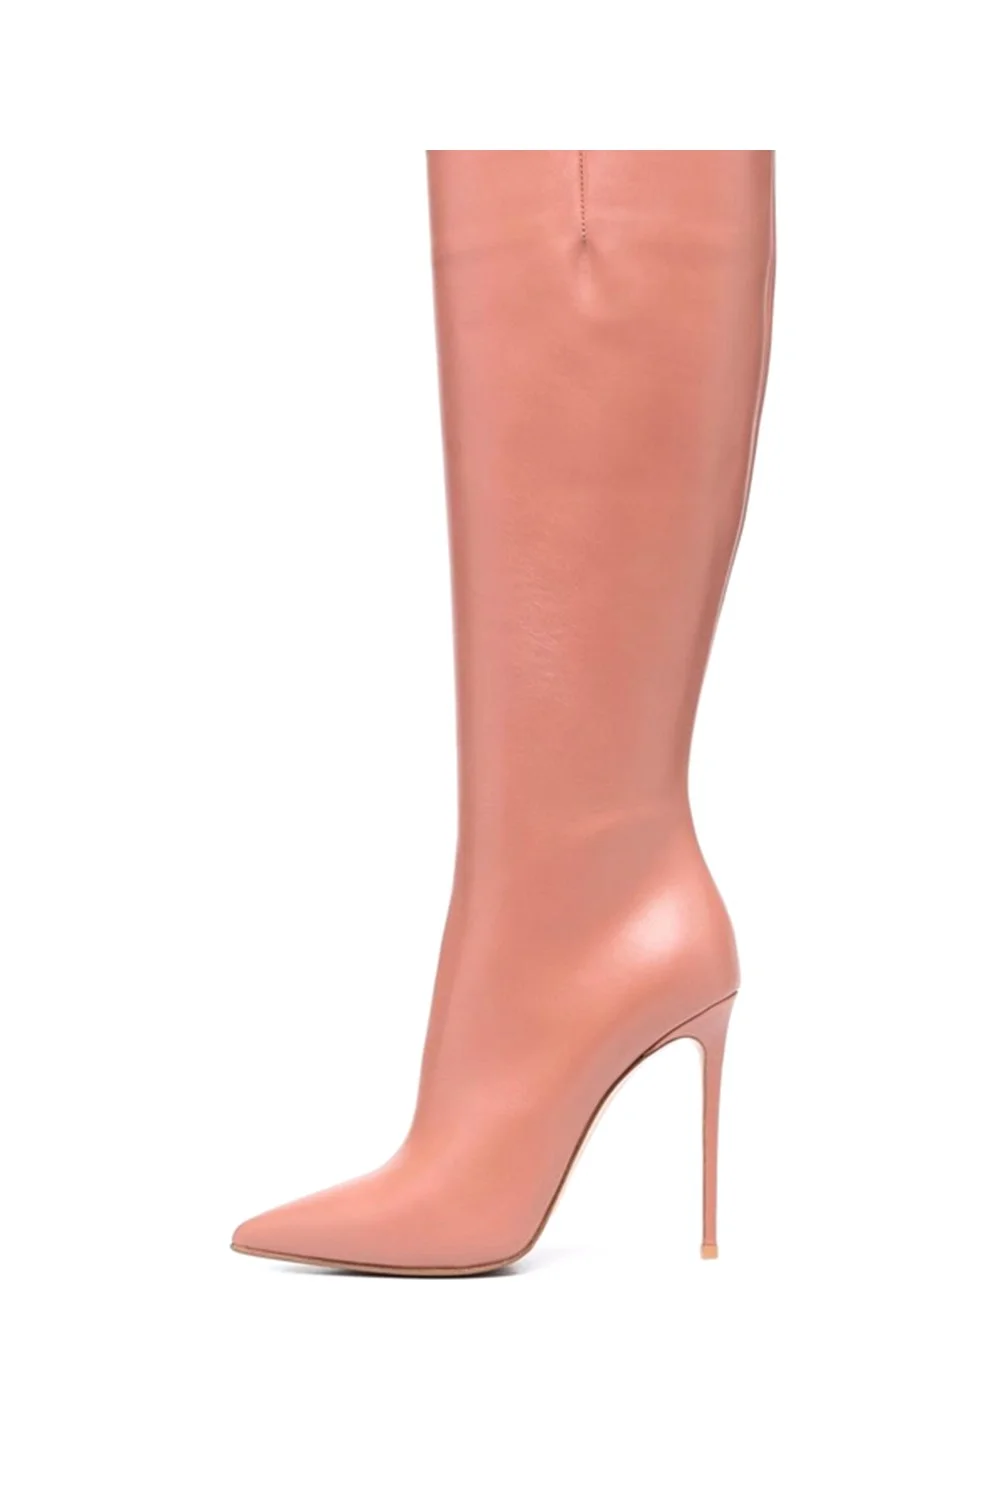  Furtado 2023 Fashion Women's Shoes spring autumn Winter Pointed Toe Stilettos Heels 12cm Knee High Boots high heels 41 42 921-1